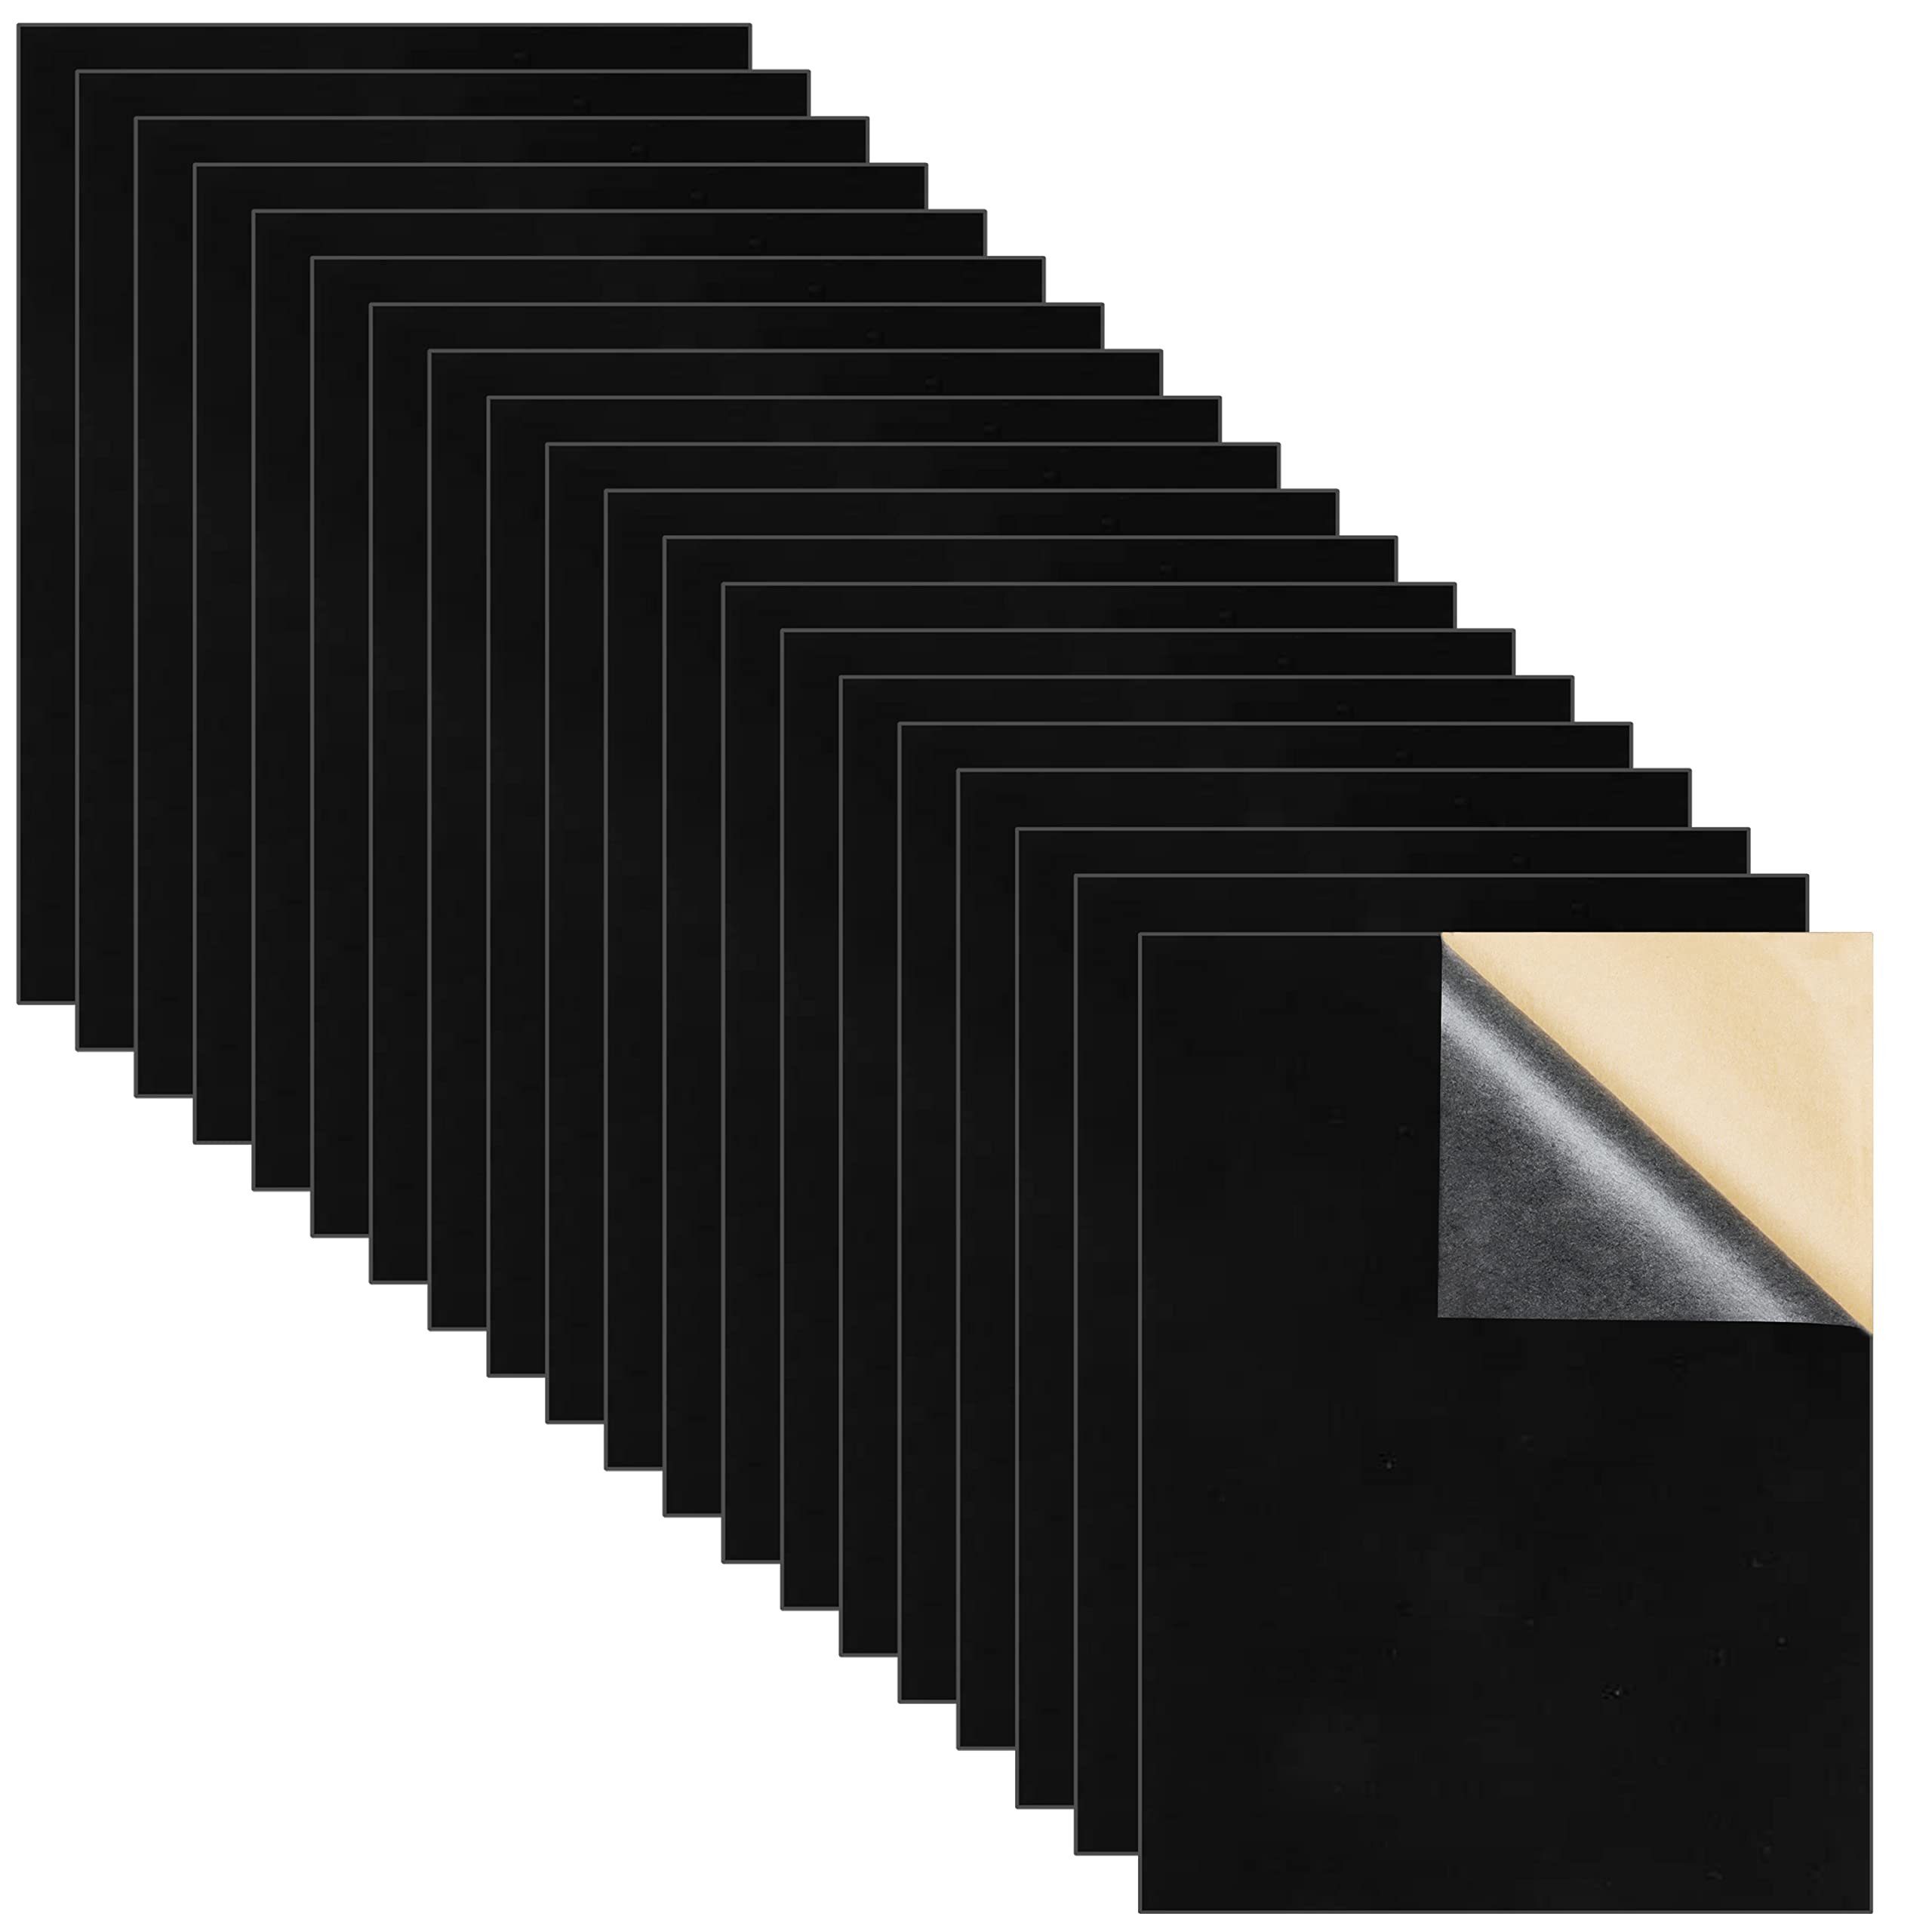 Belle Vous Aquarellpapier 40 Stk. Selbstklebende Samtfolie Schwarz 21x29,7 cm - A4 Format, 40 Stk. Selbstklebende Samtfolie Schwarz 21x29,7 cm - A4 Größe